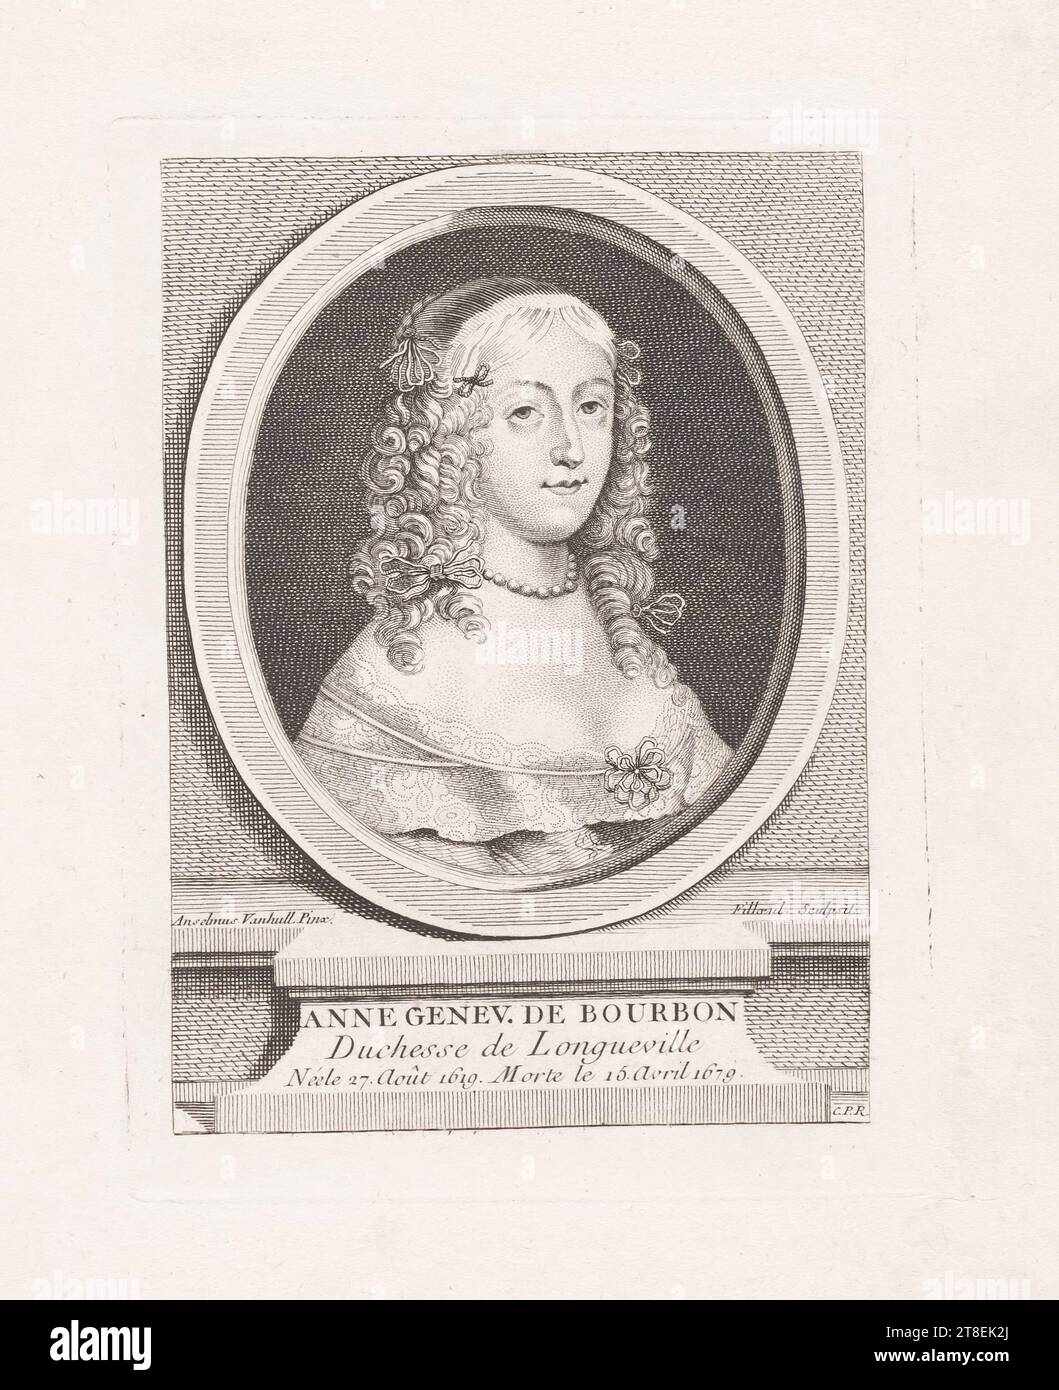 Anselmus Vanhull Pinx. Filloeul Sculpsit. ANNE GENEV. DE BOURBON Duchess of Longueville Born August 27, 1619. Died on 15. April 1679. C.P.R Stock Photo